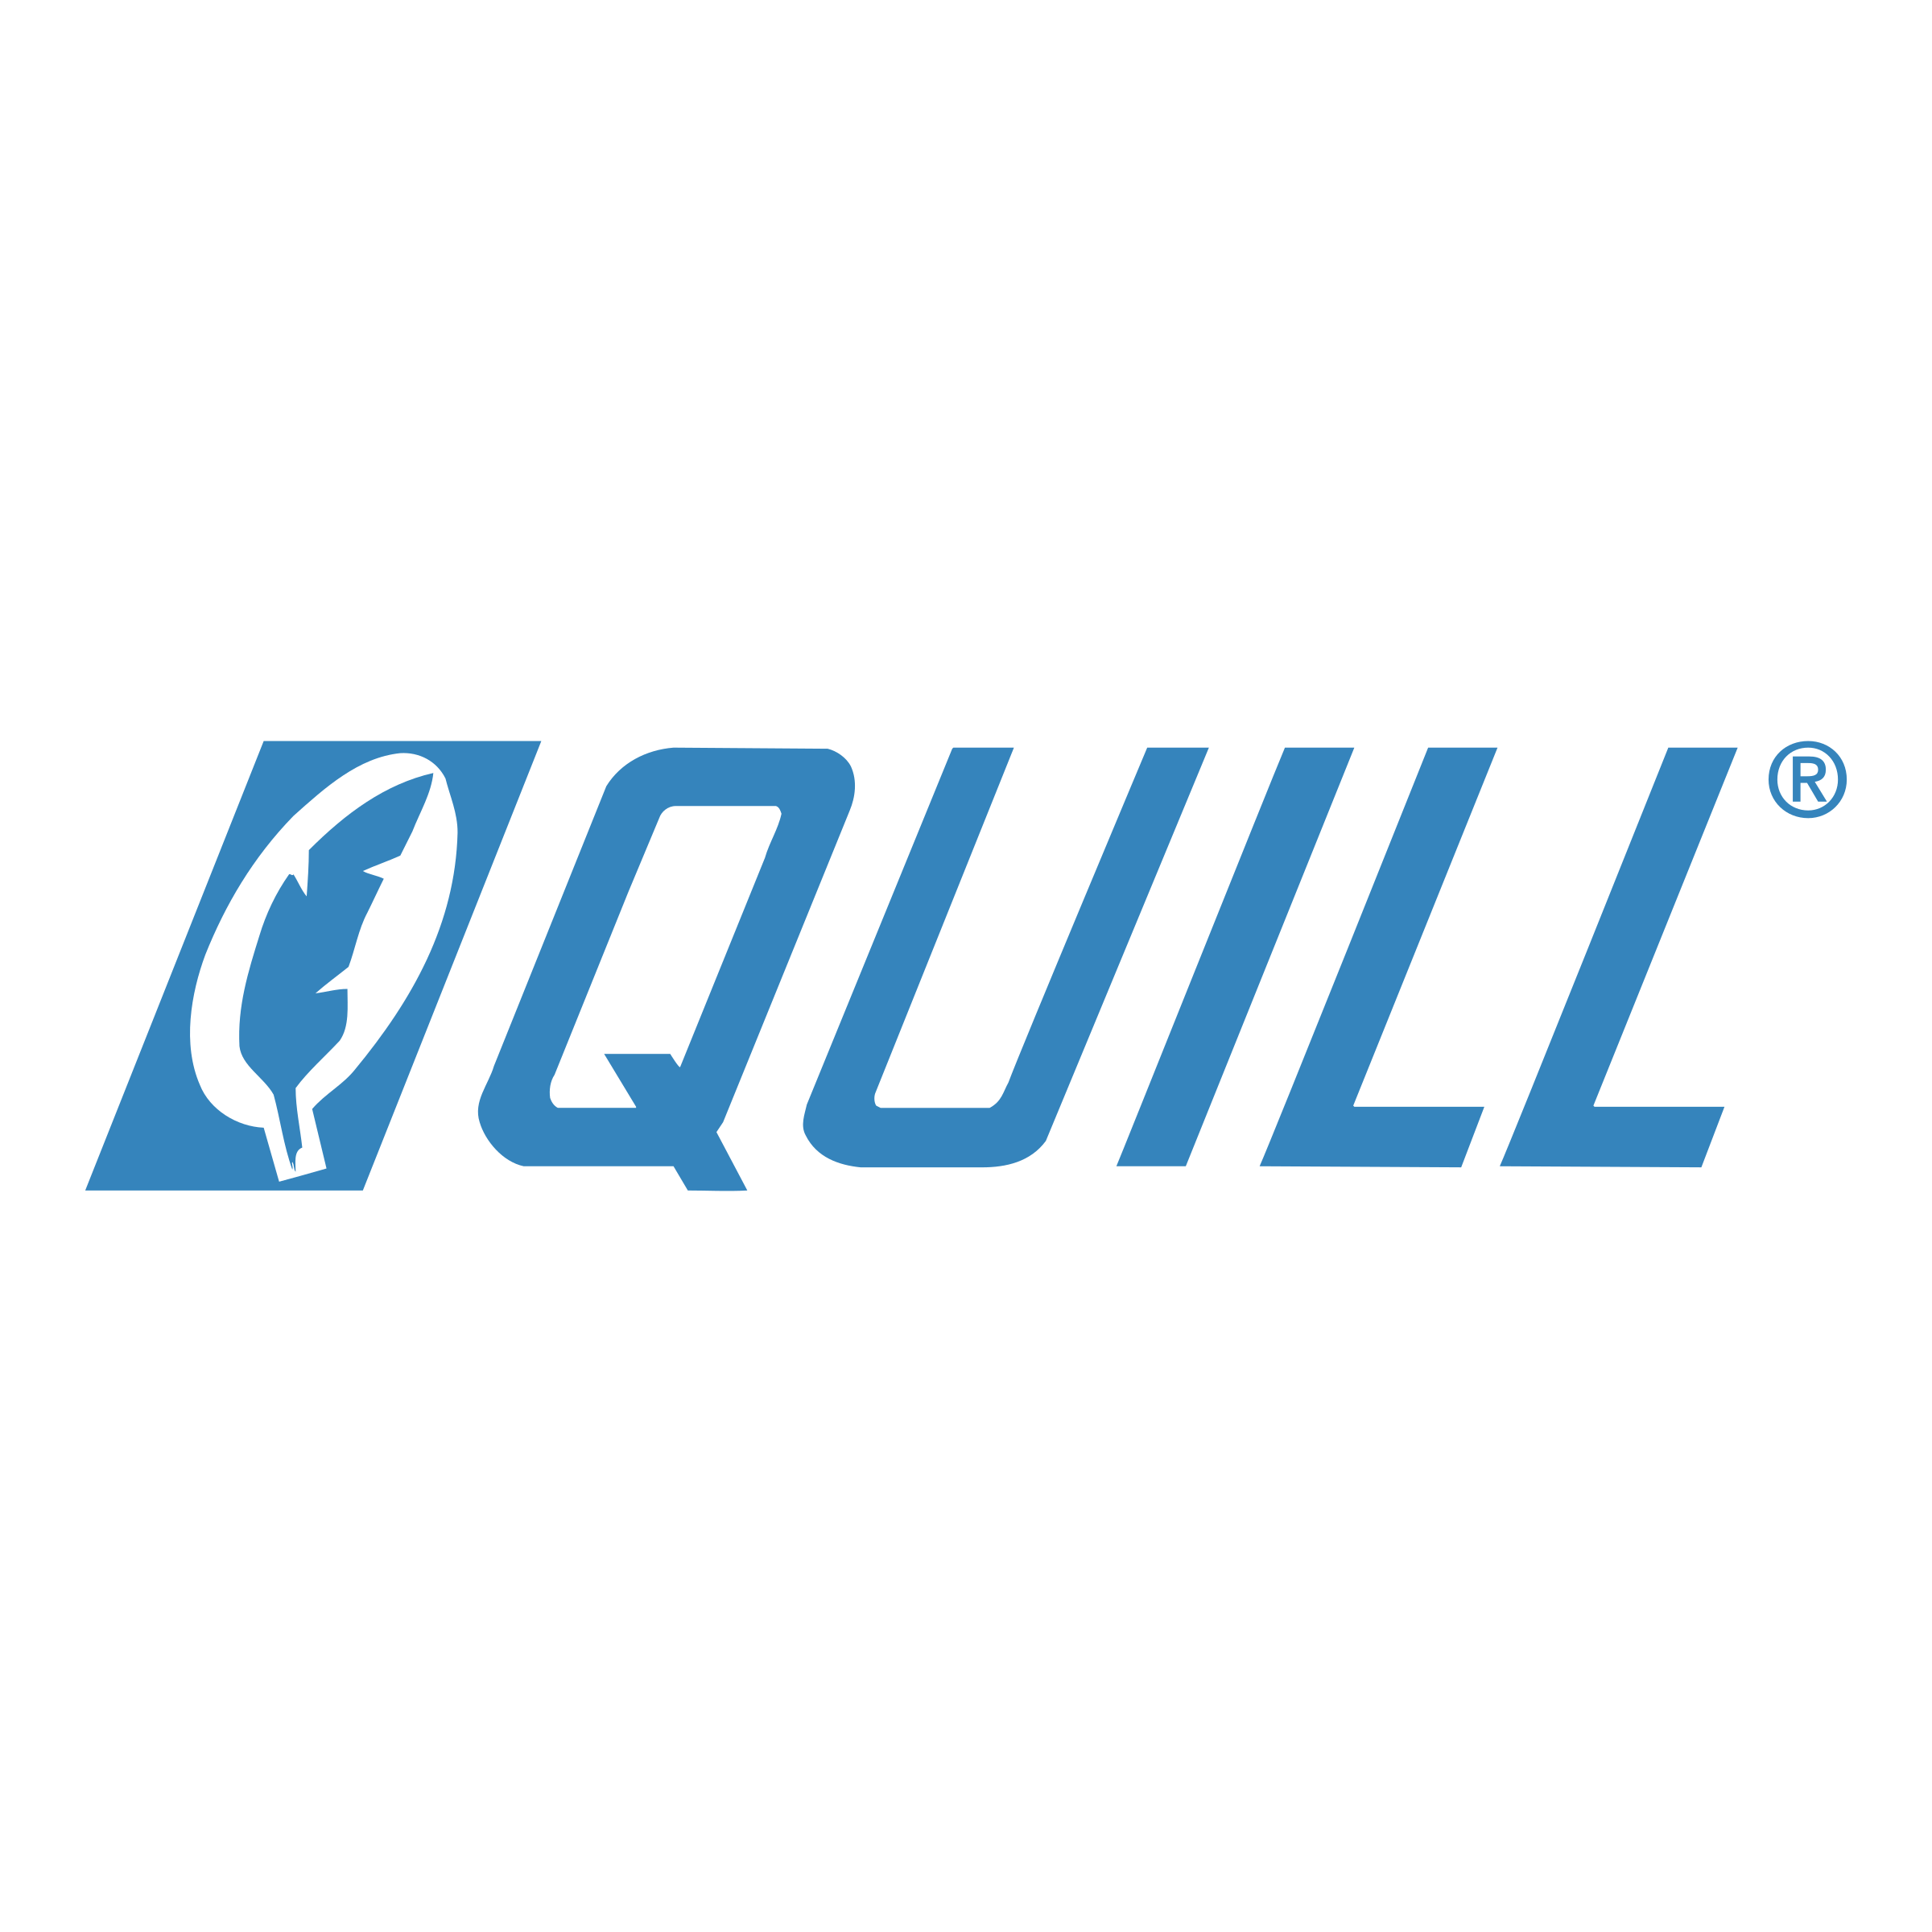 Quill.com Logo - Quill Logo PNG Transparent & SVG Vector - Freebie Supply